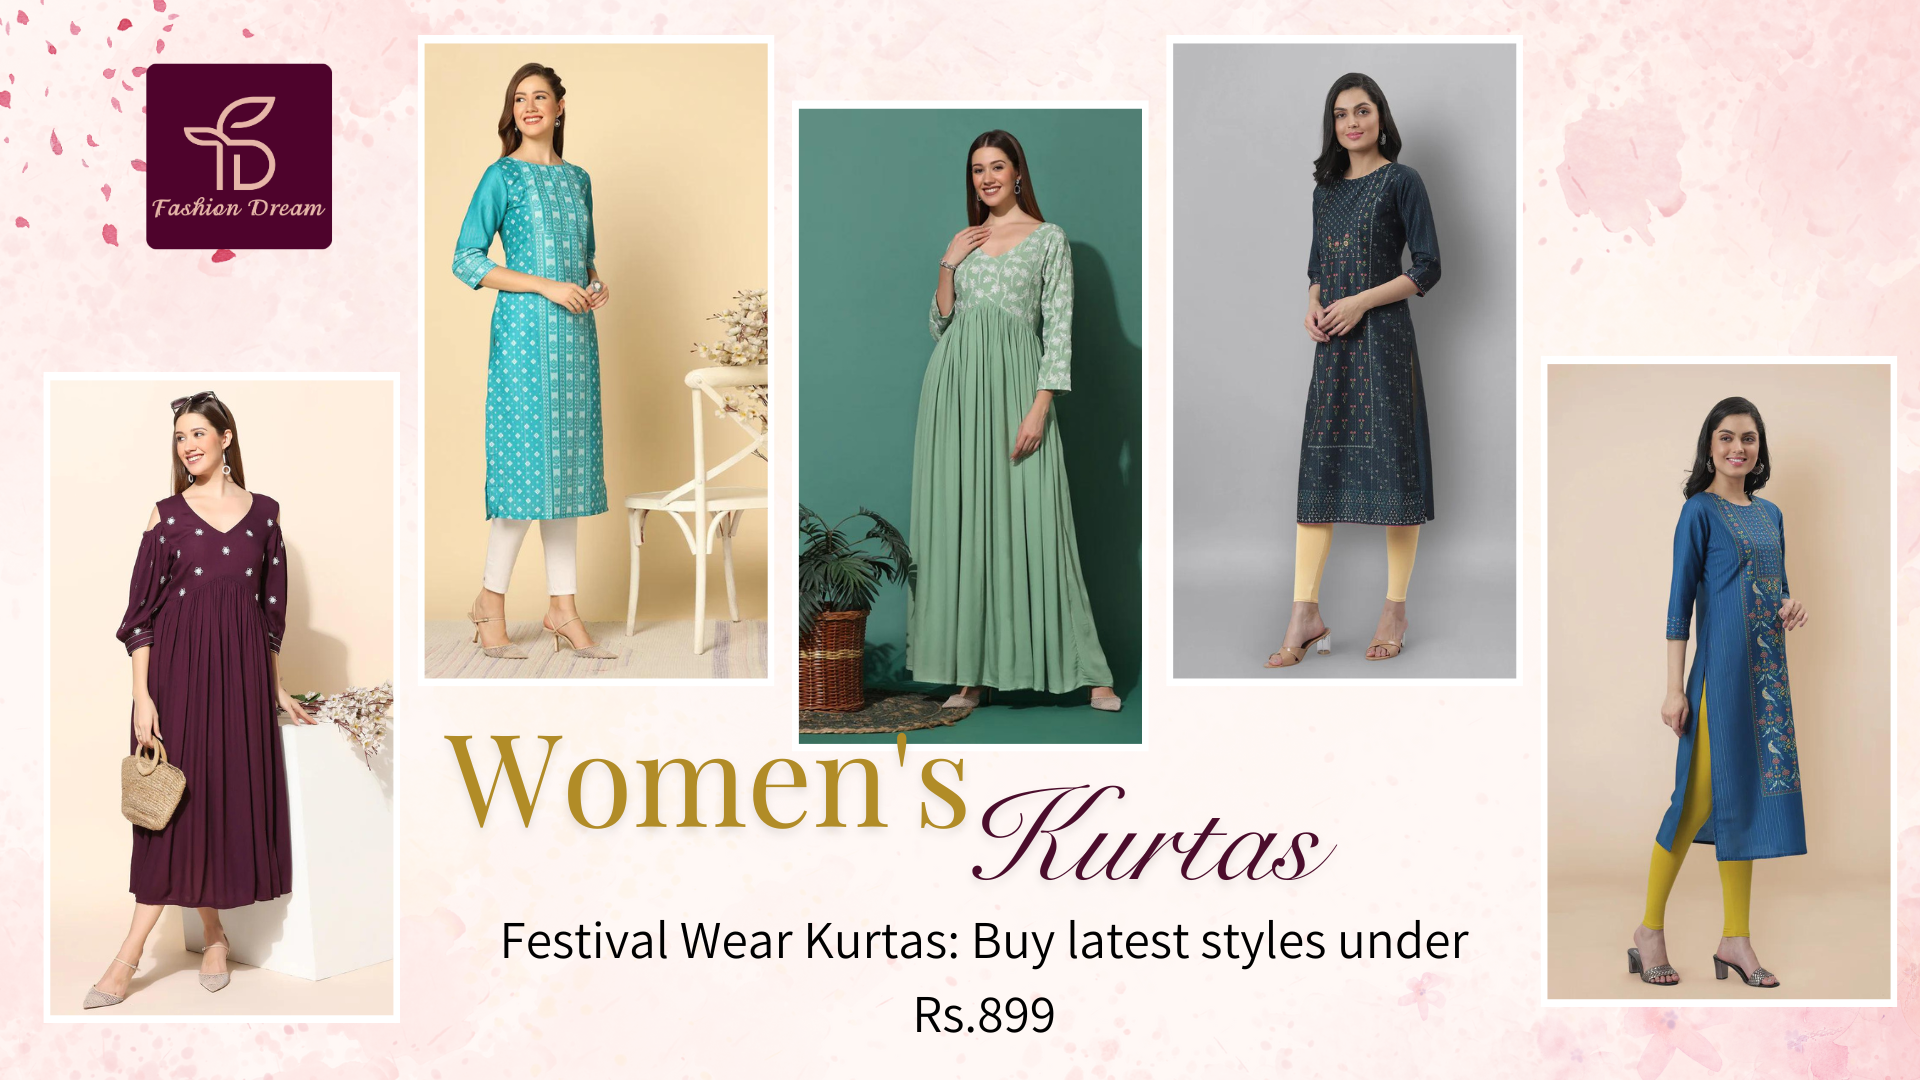 Festival Wear Kurtas: Buy latest styles under Rs.899